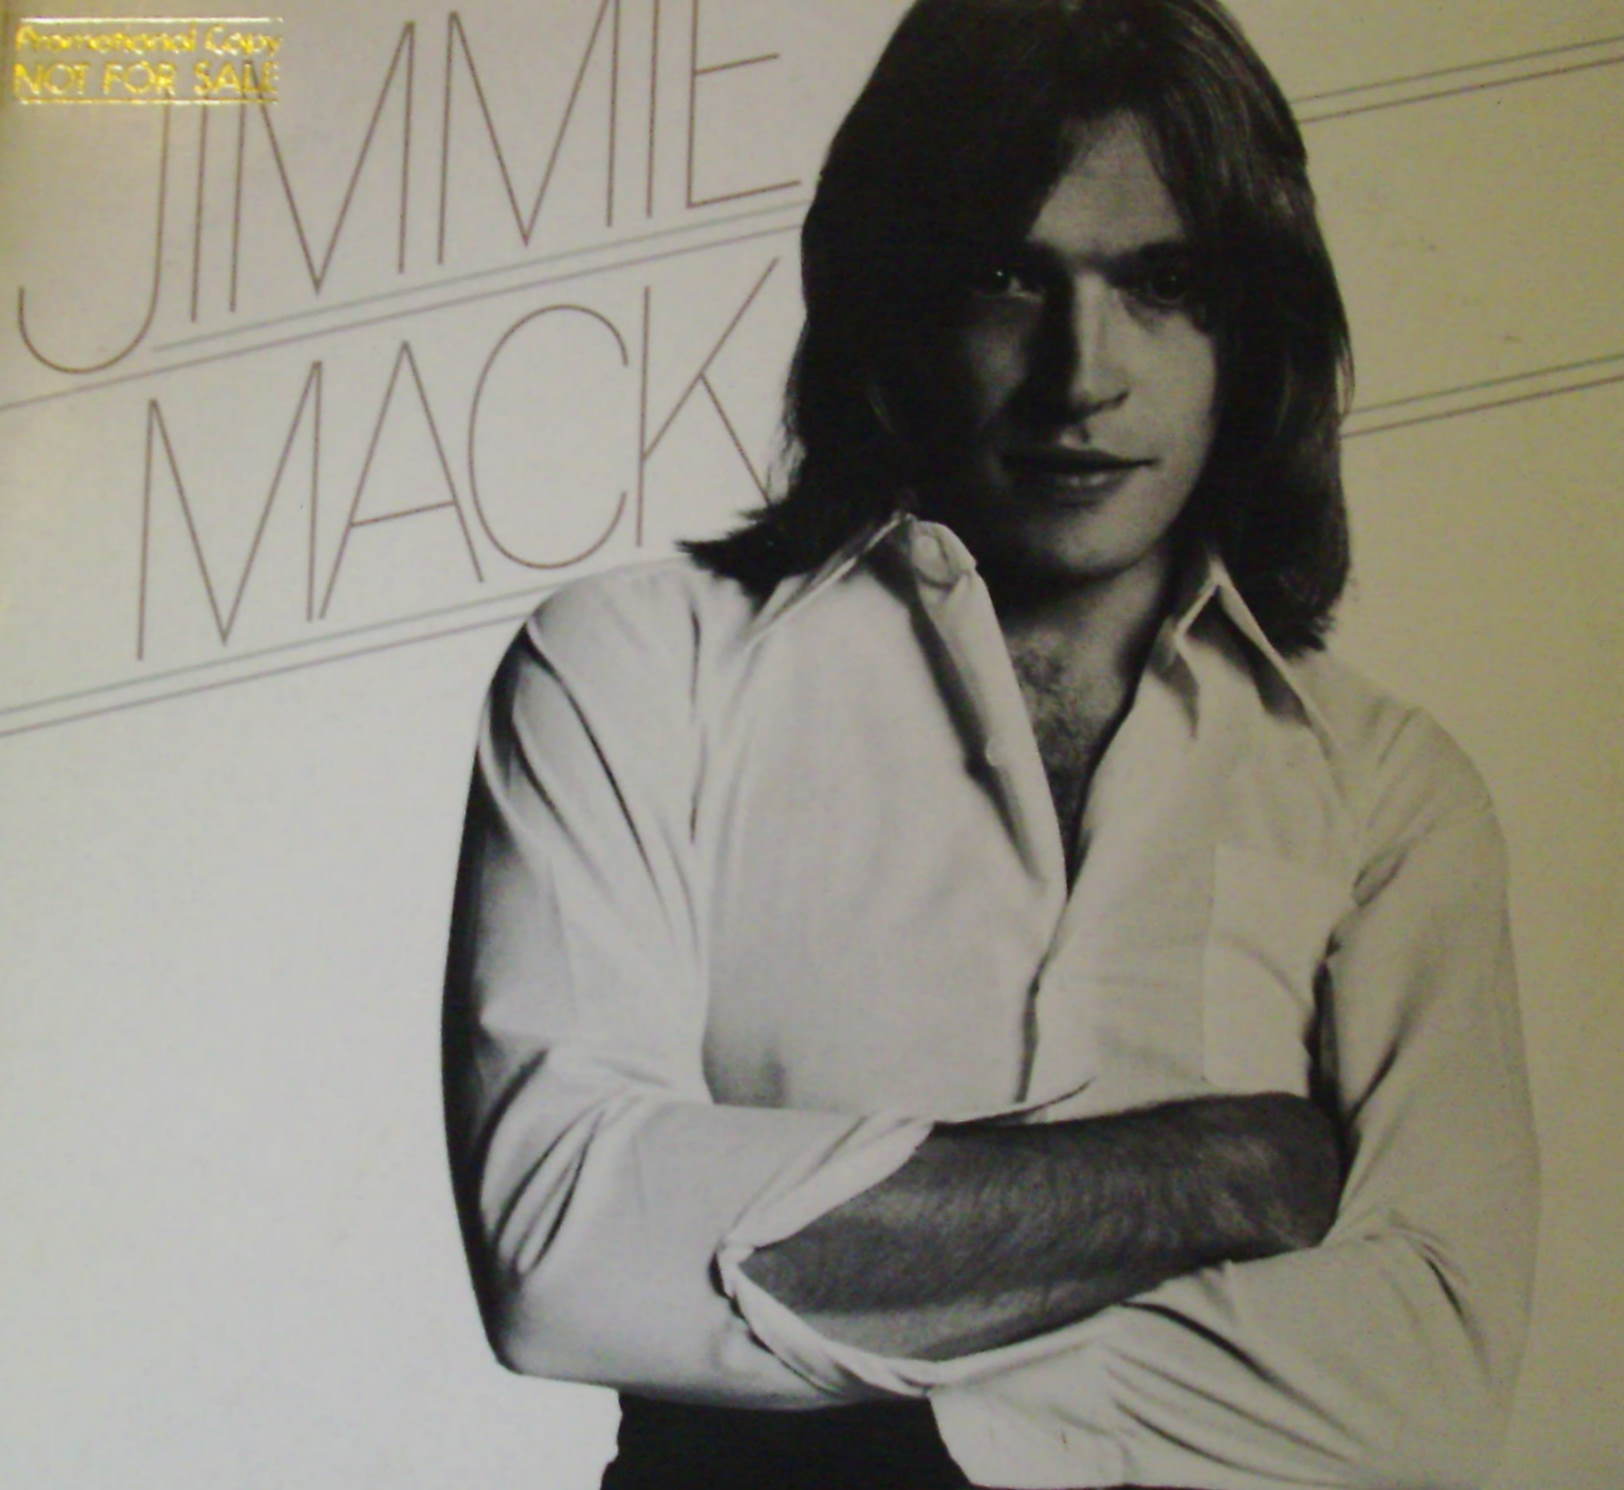 Jimmie Mack / Jimmie Mack